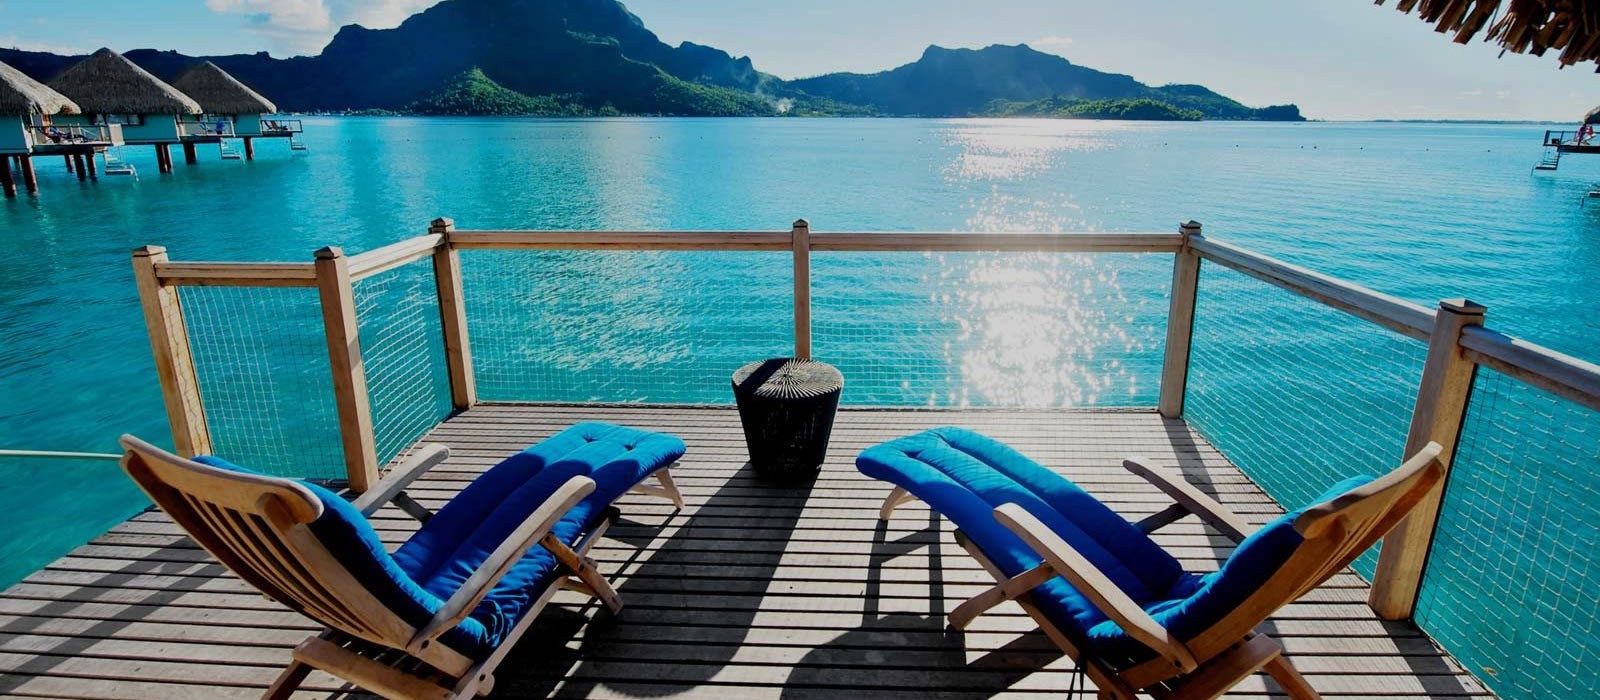 Le Meridien Bora Bora - Luxuxry Bora Bora holidays - PD Header